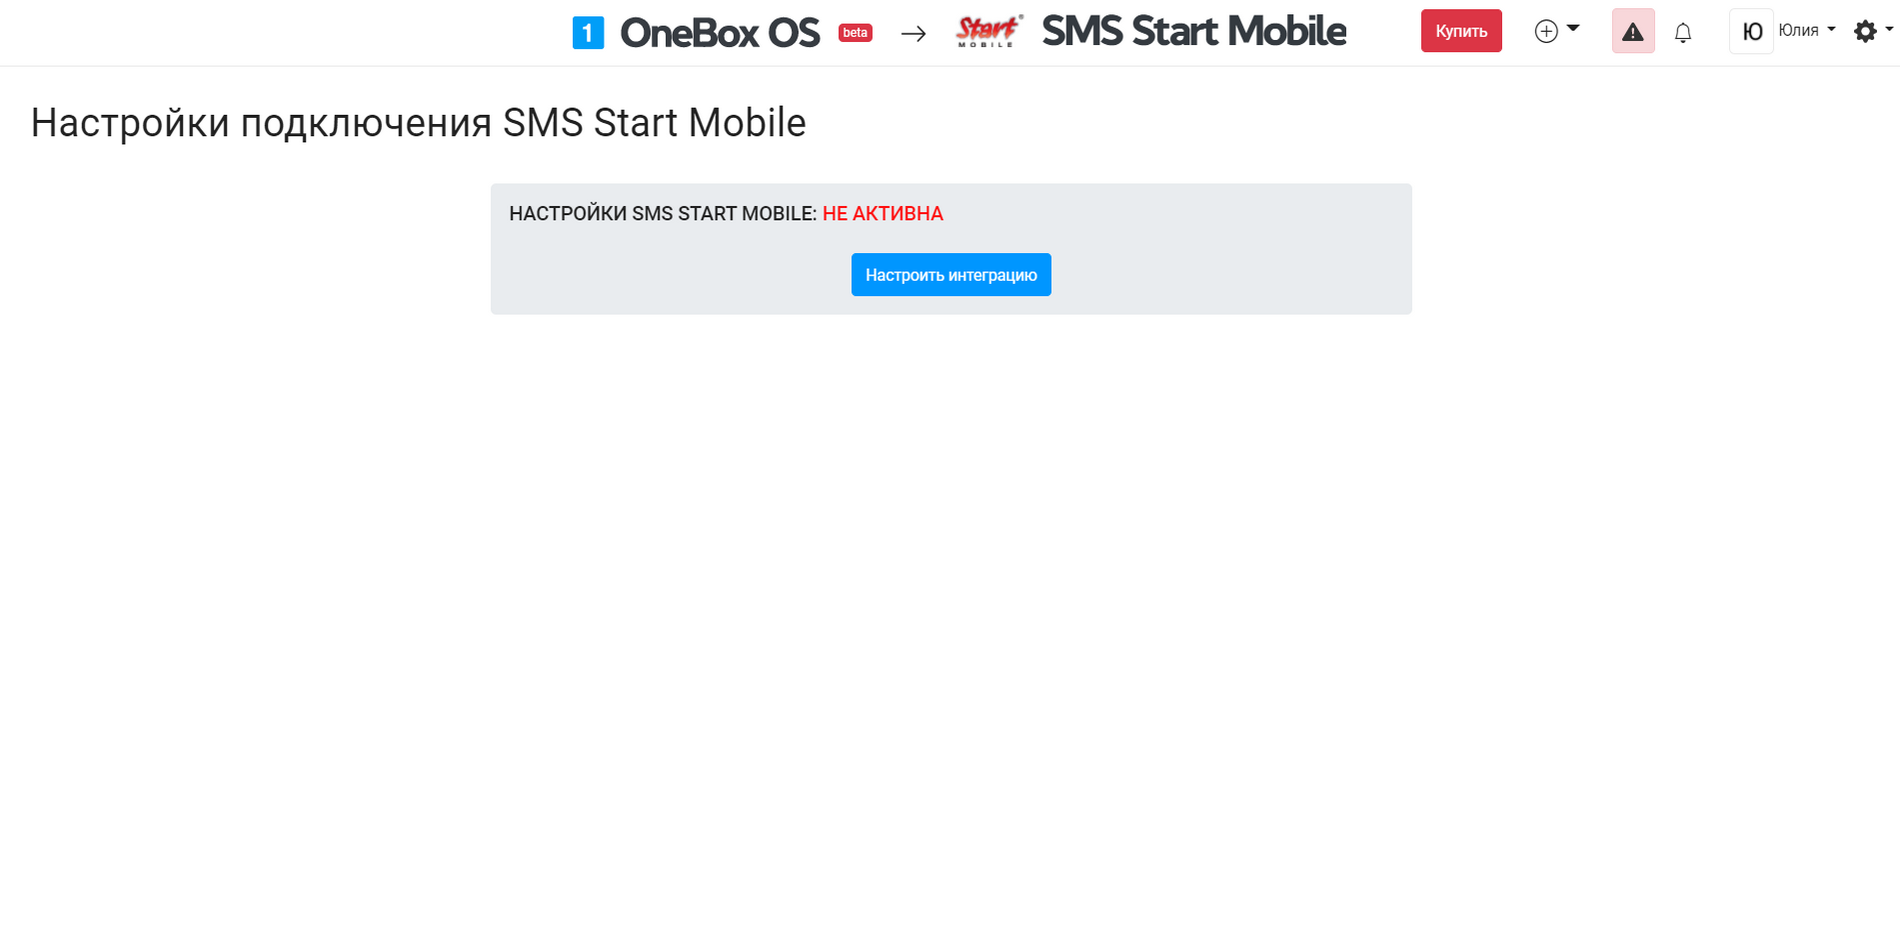 Приложение SMS Start Mobile